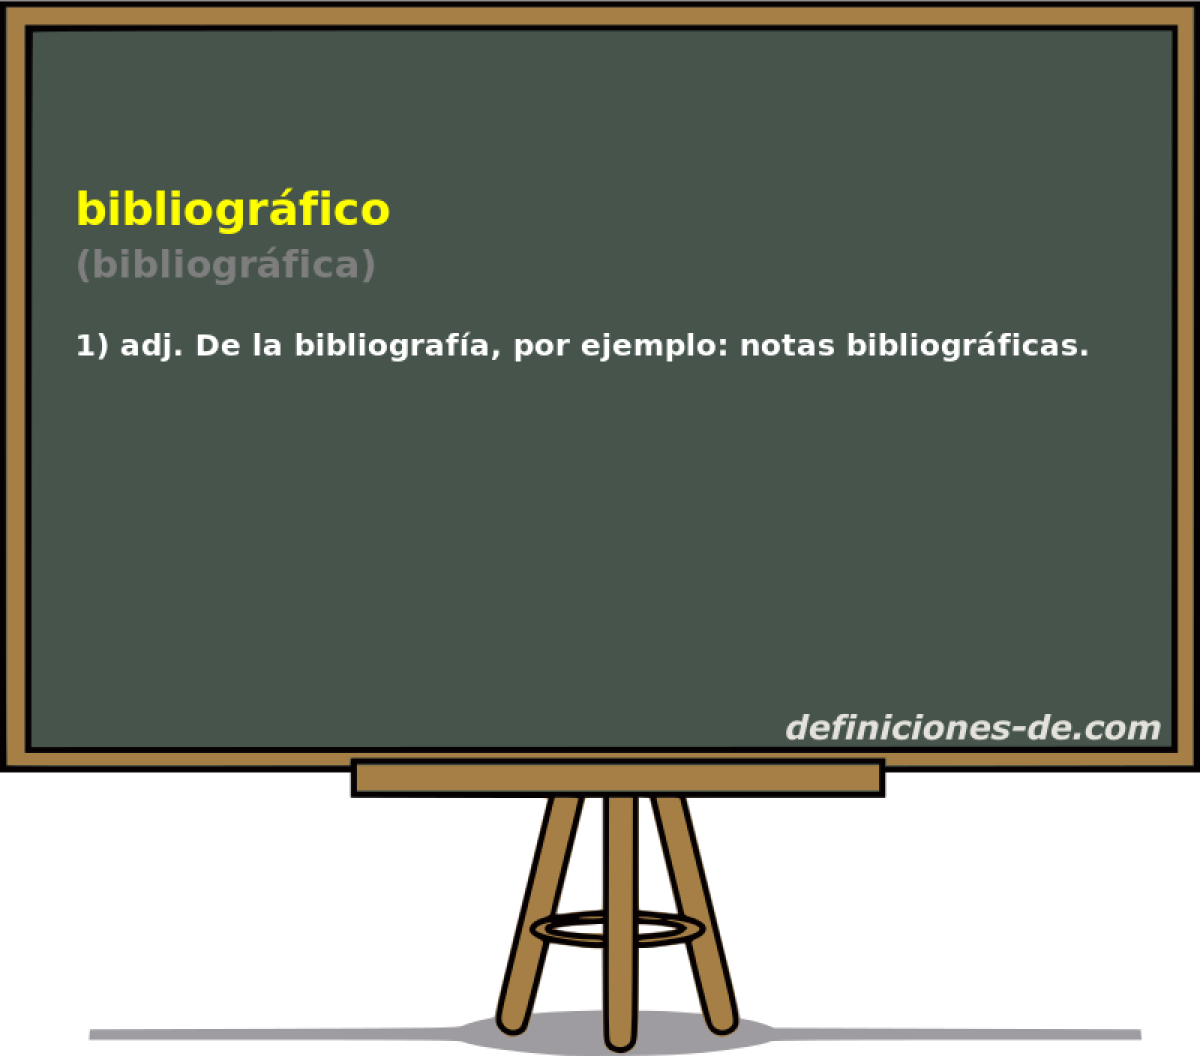 bibliogrfico (bibliogrfica)